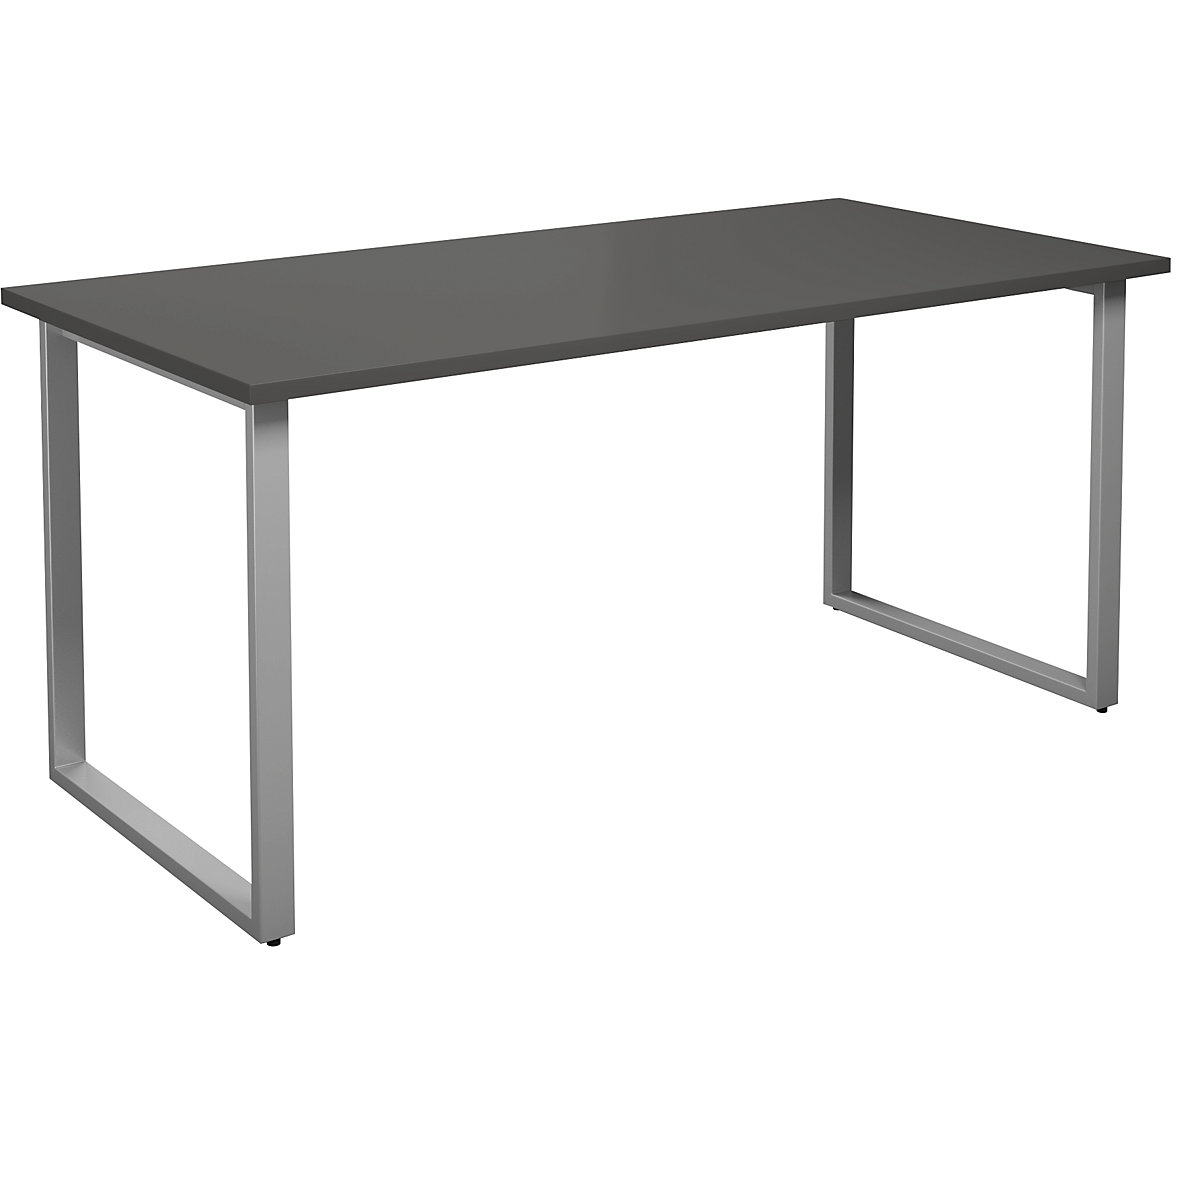 DUO-O multi-purpose desk, straight tabletop, WxD 1600 x 800 mm, dark grey, silver-8